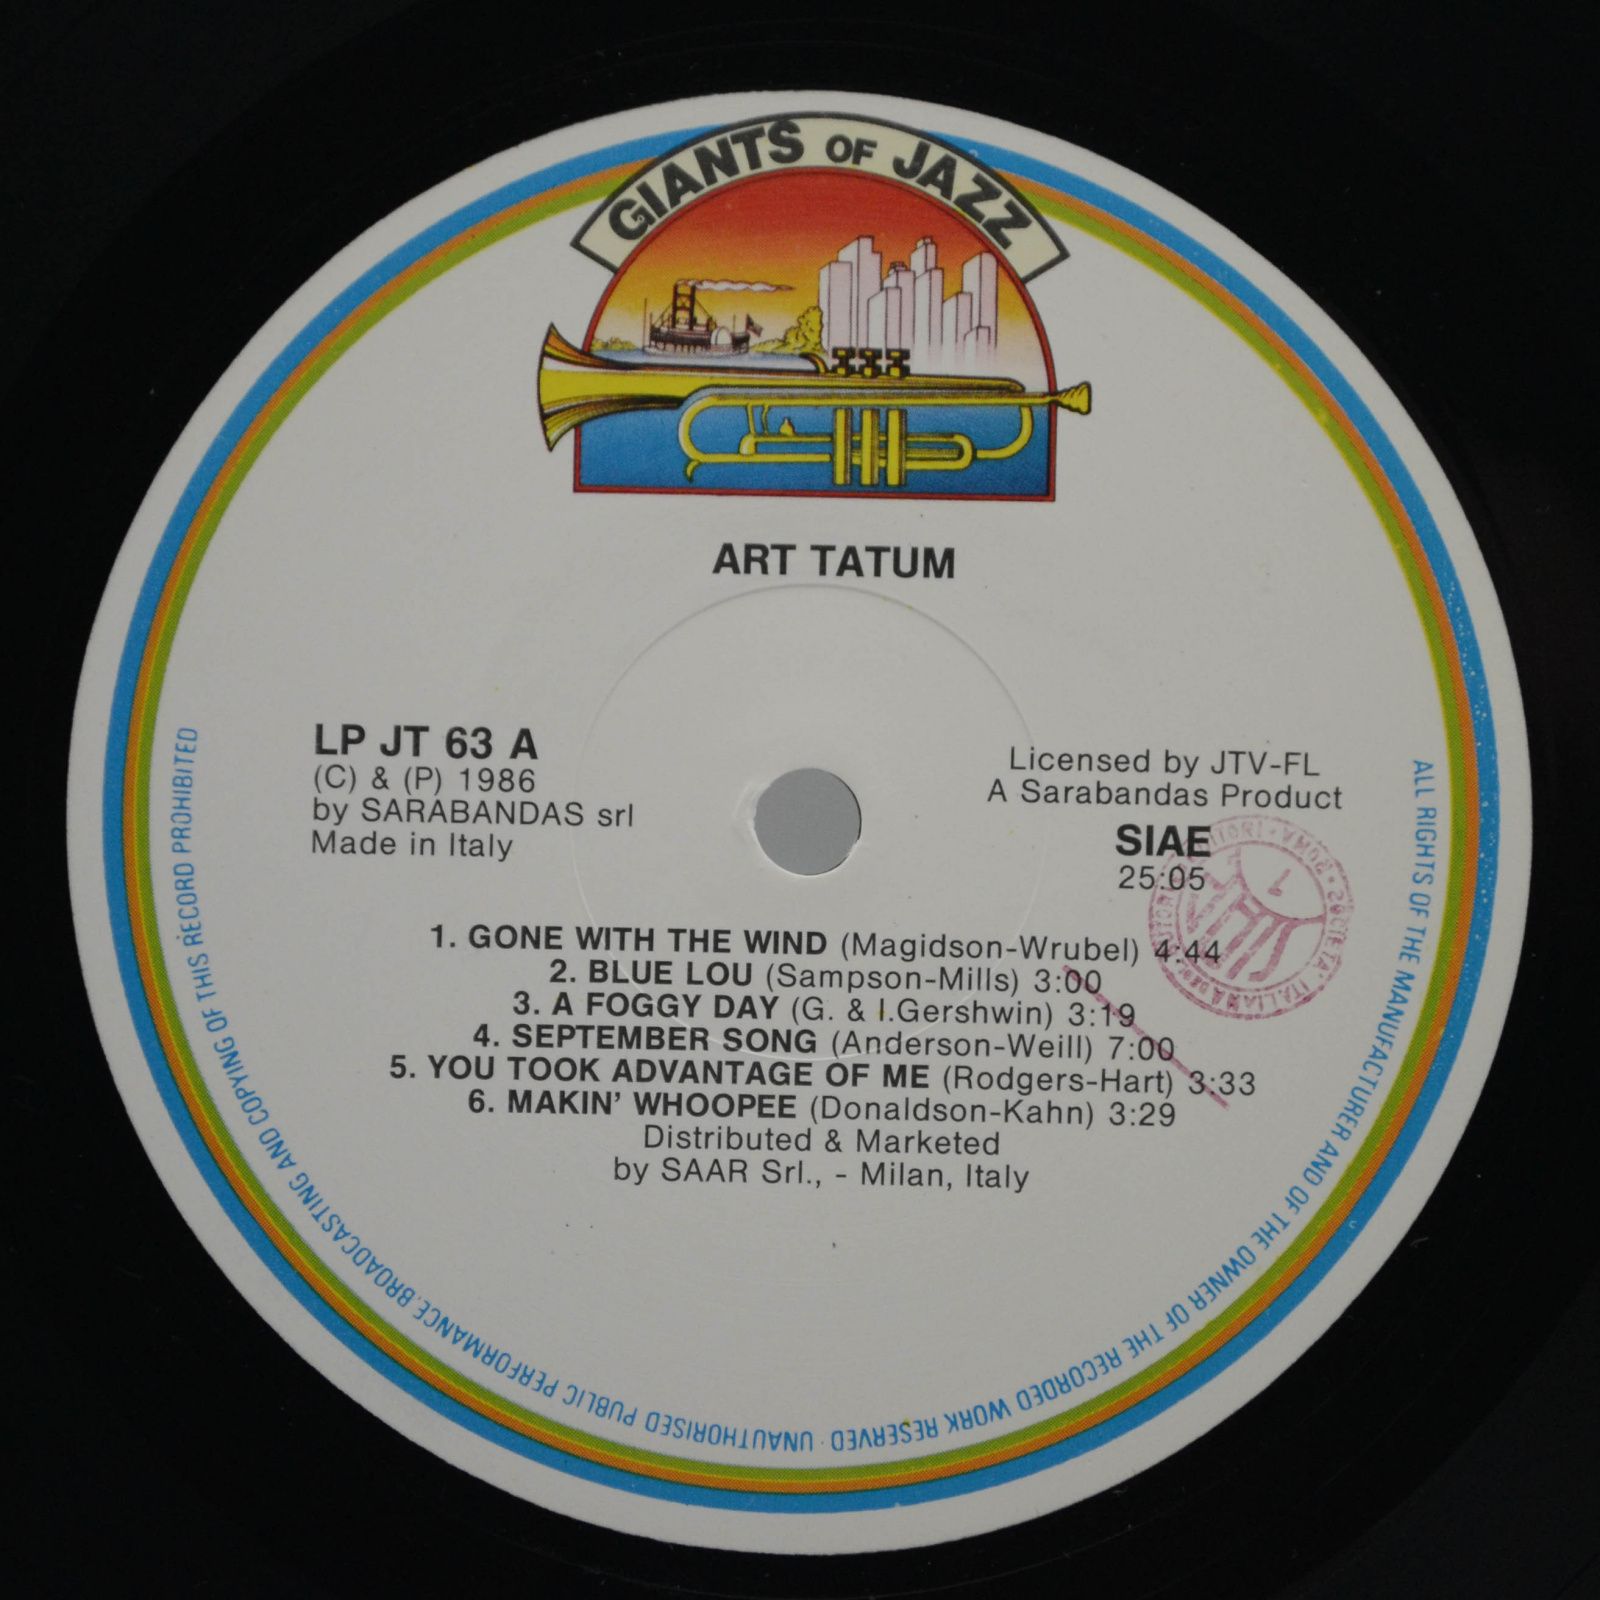 Art Tatum — Art Tatum, 1986